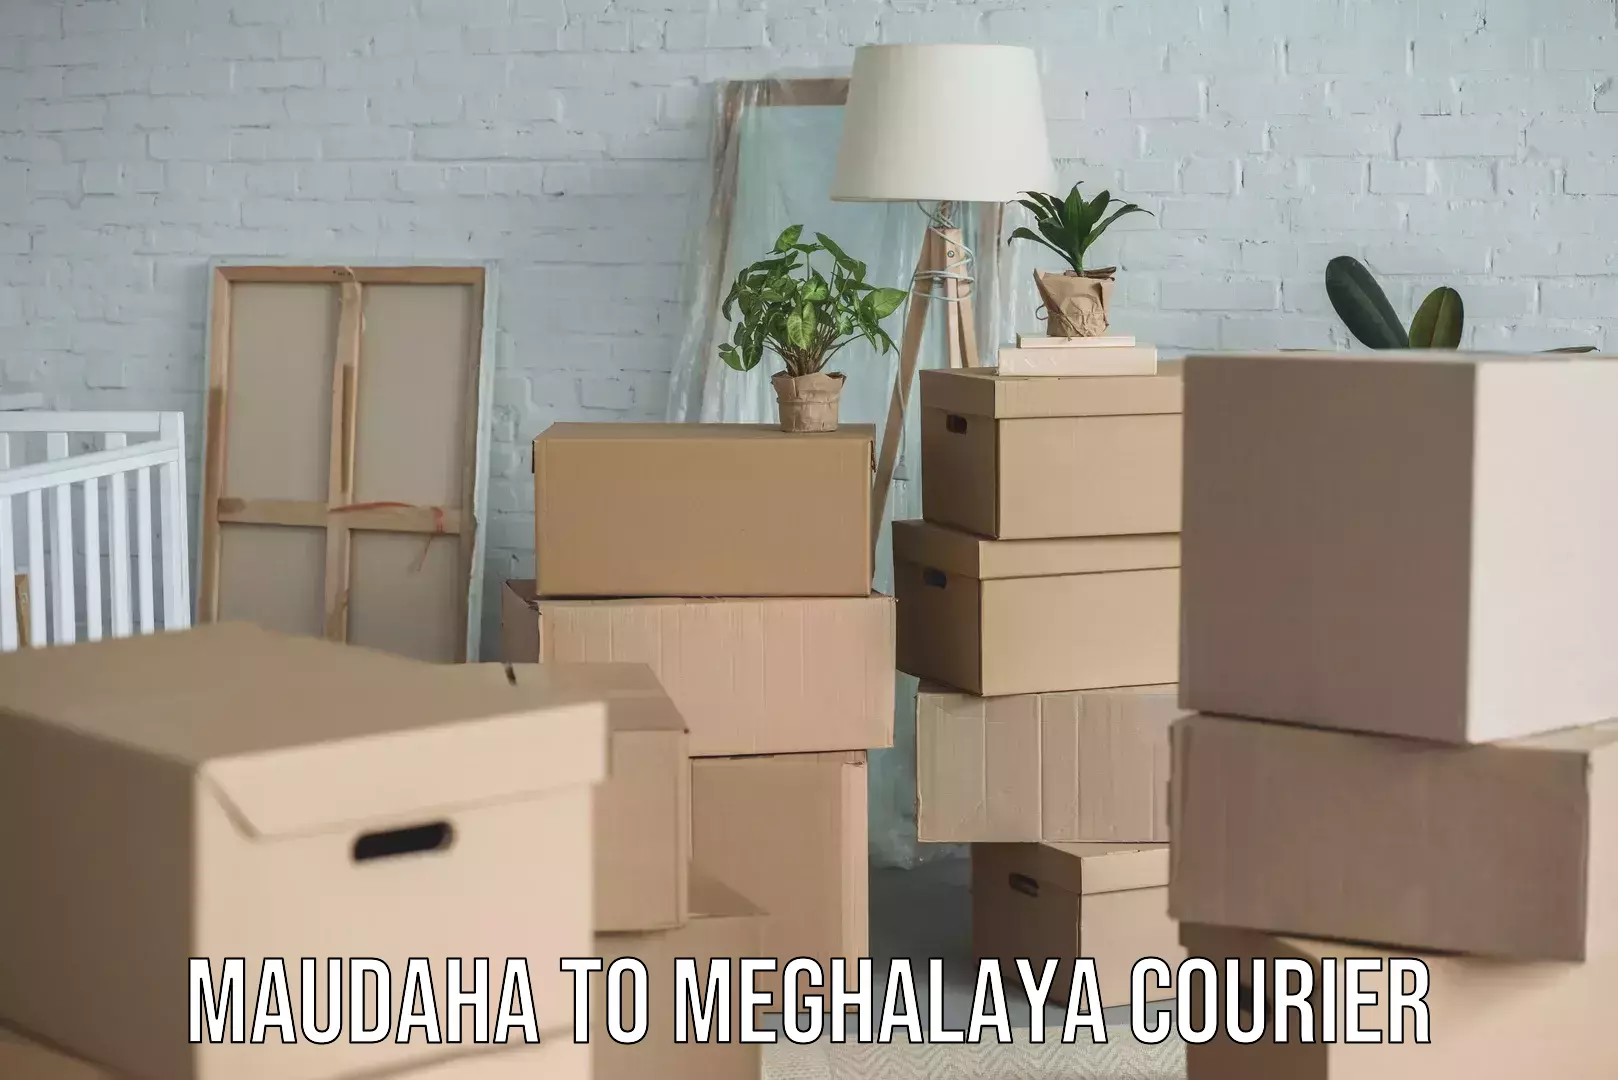 Trusted moving company in Maudaha to Meghalaya